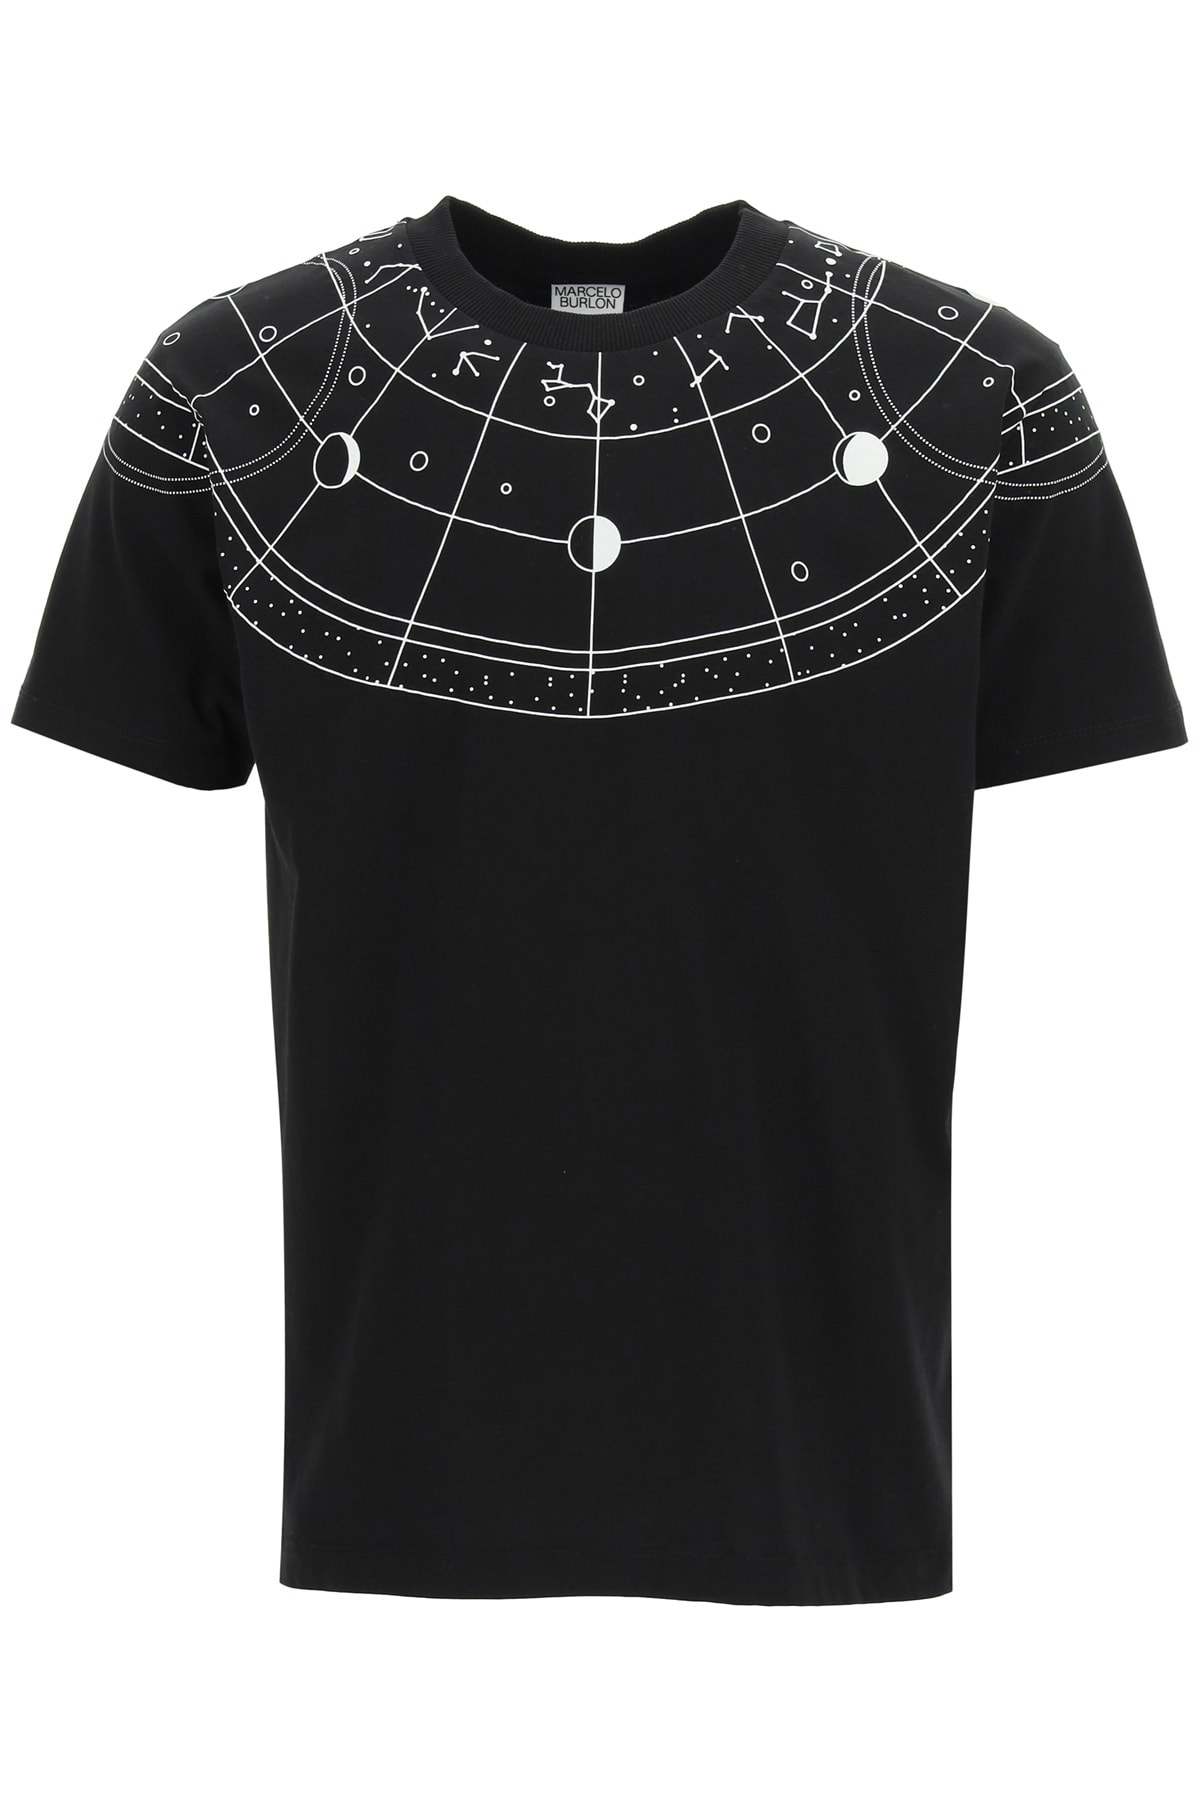 Marcelo Burlon Semi Astral T-shirt